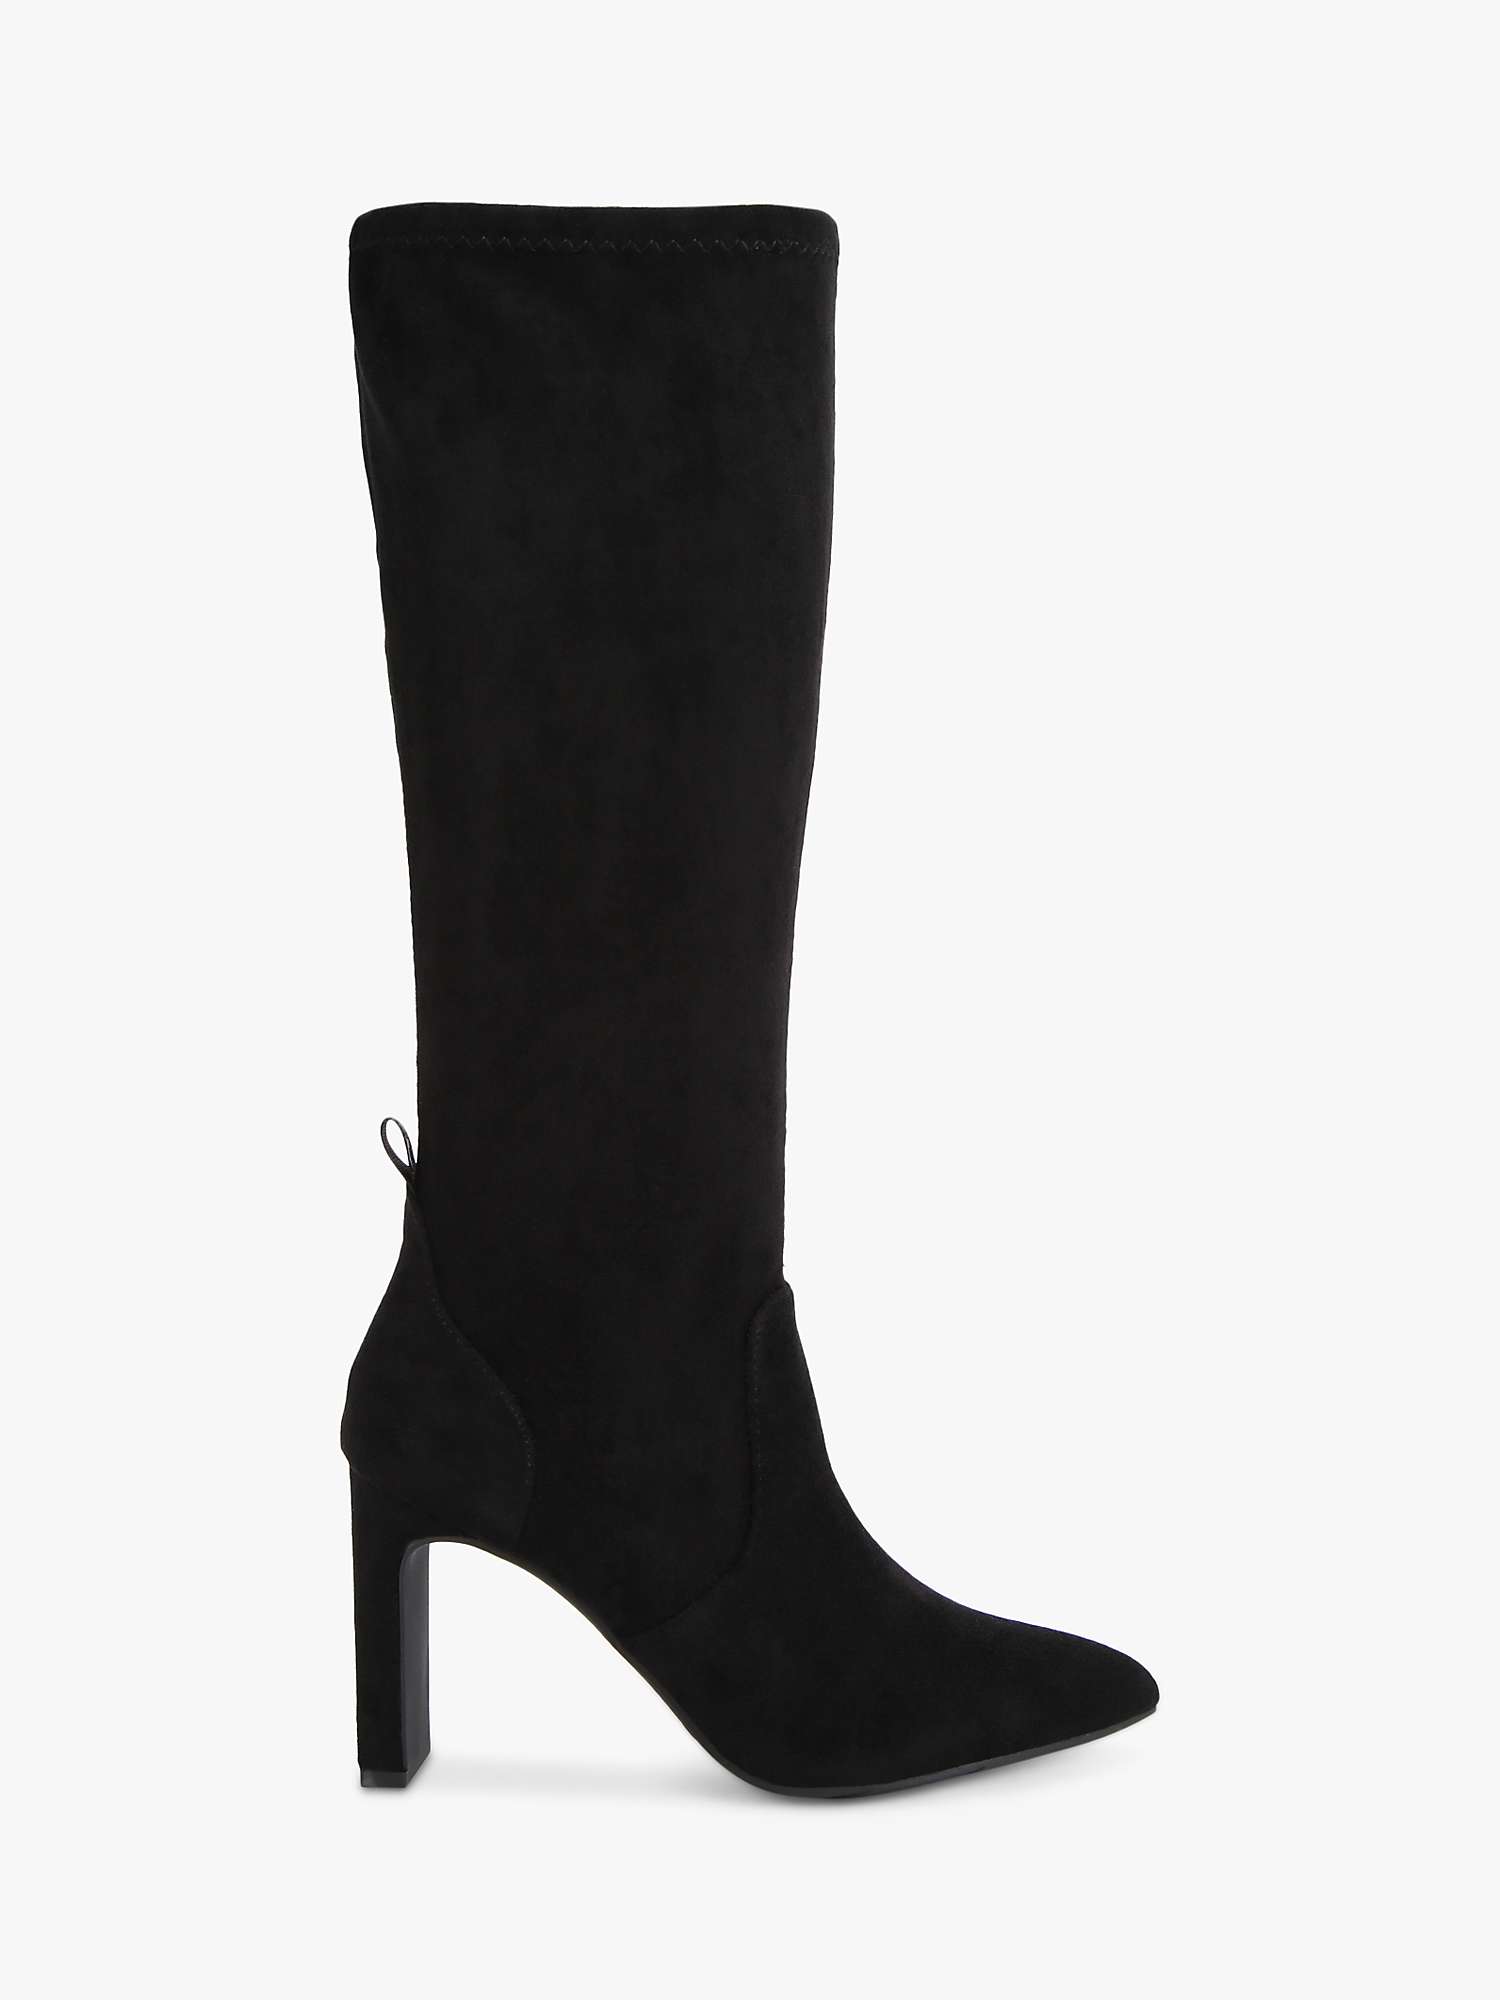 Buy KG Kurt Geiger Thara Suede Knee High Boots, Black Online at johnlewis.com